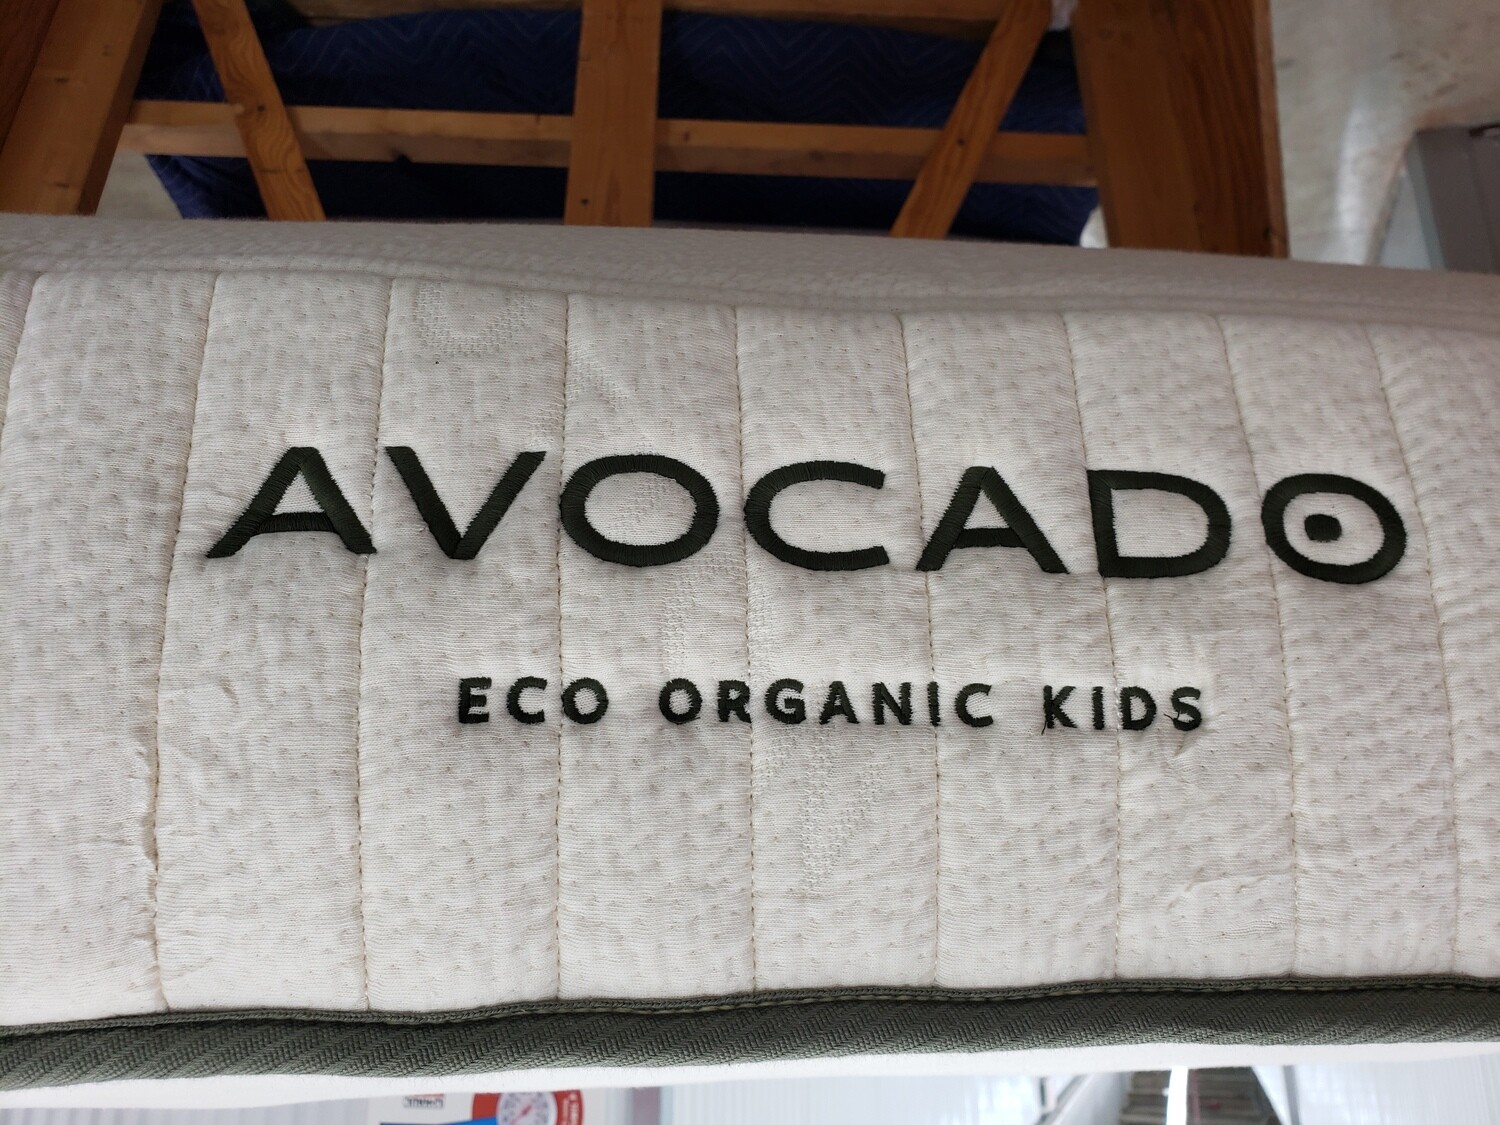 Avocado FULL Eco Organic Kids trial Mattress, tiny mark (FL0702-1013) #2120